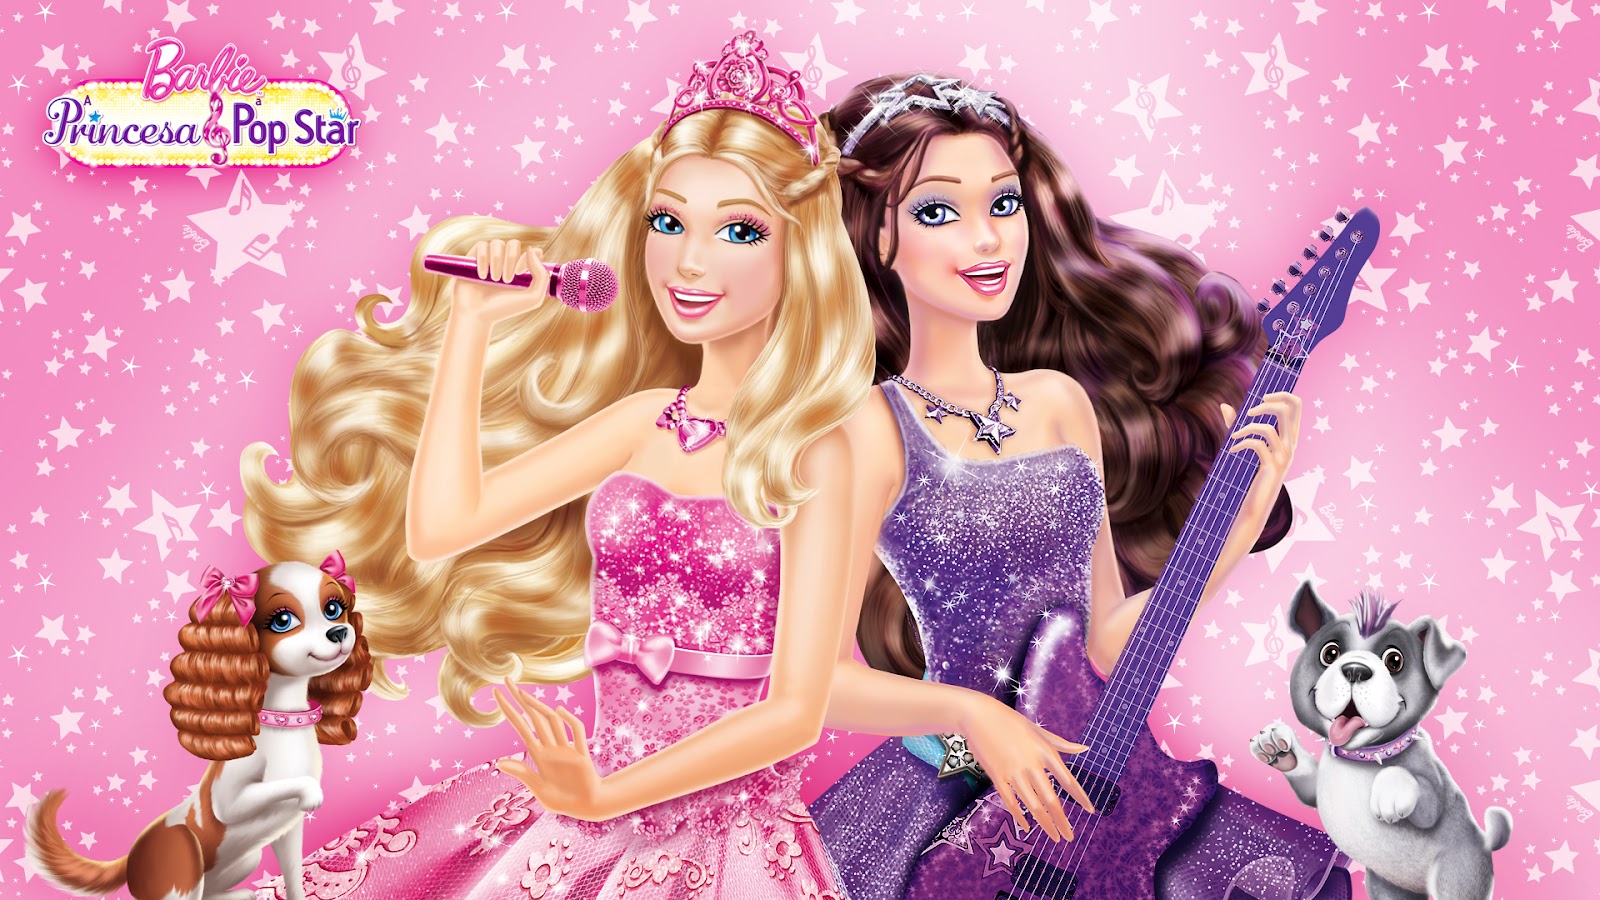 Barbie Princesa Pop Star Image Wallpaper55 Best Wallpaper